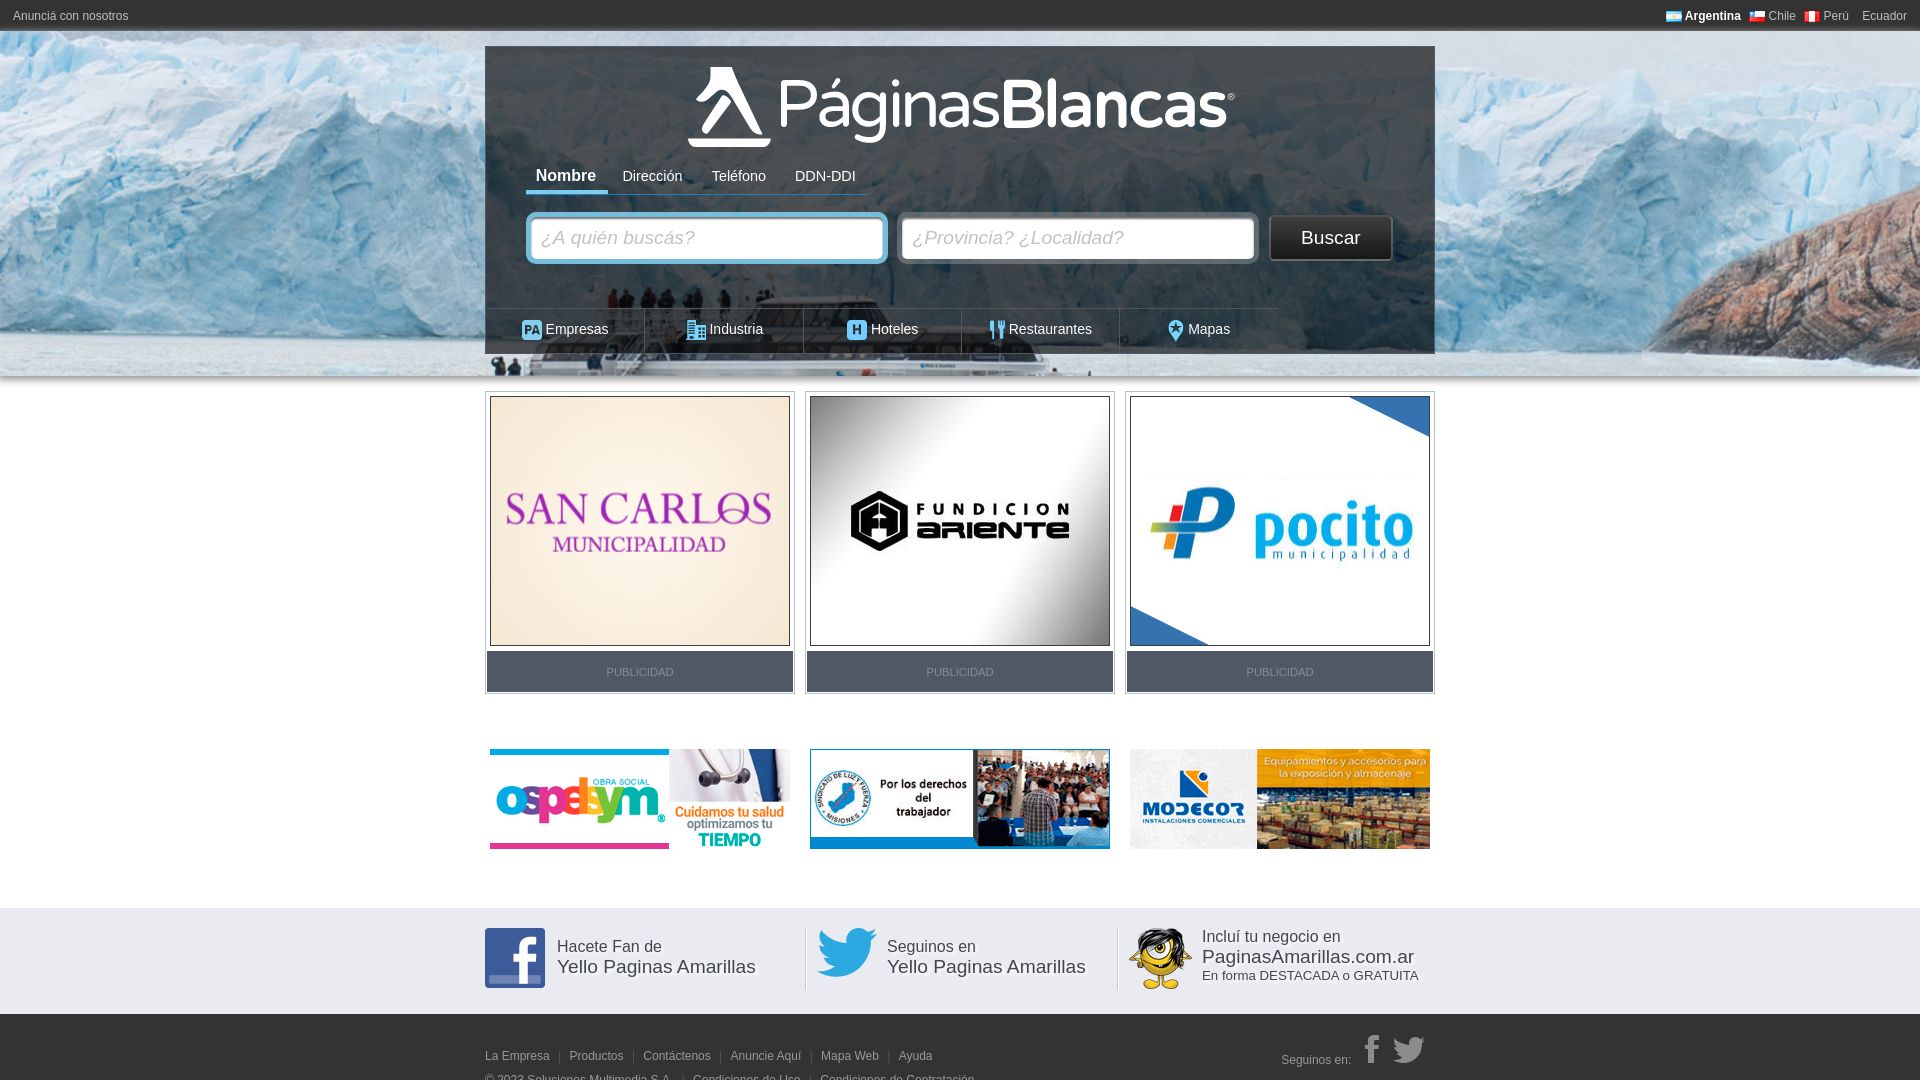 Webseitenstatus www.paginasblancas.com.ar ist   ONLINE